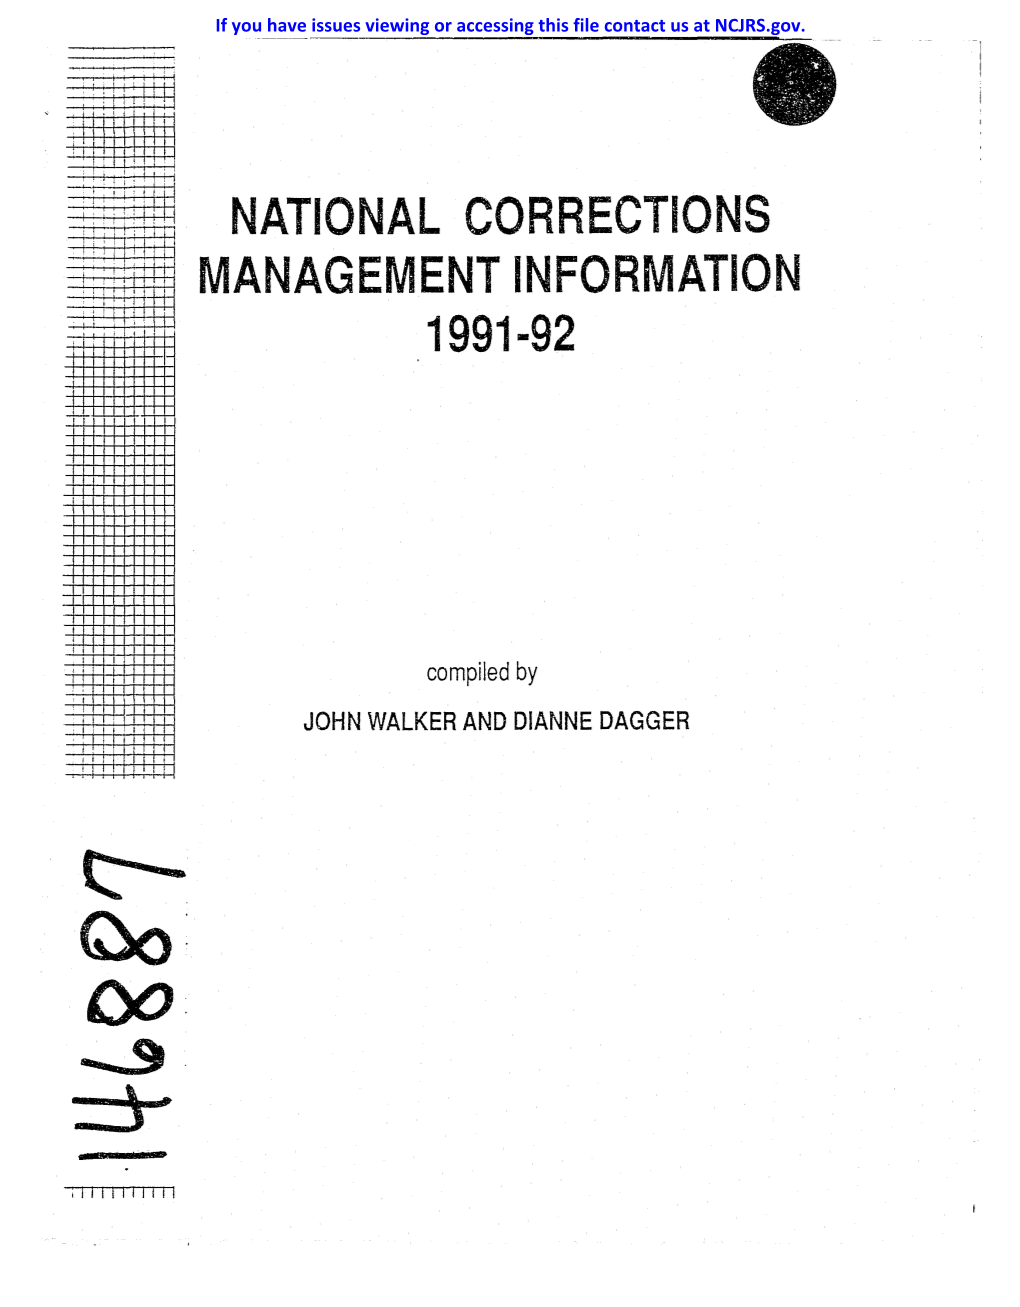 National Corrections Management Information